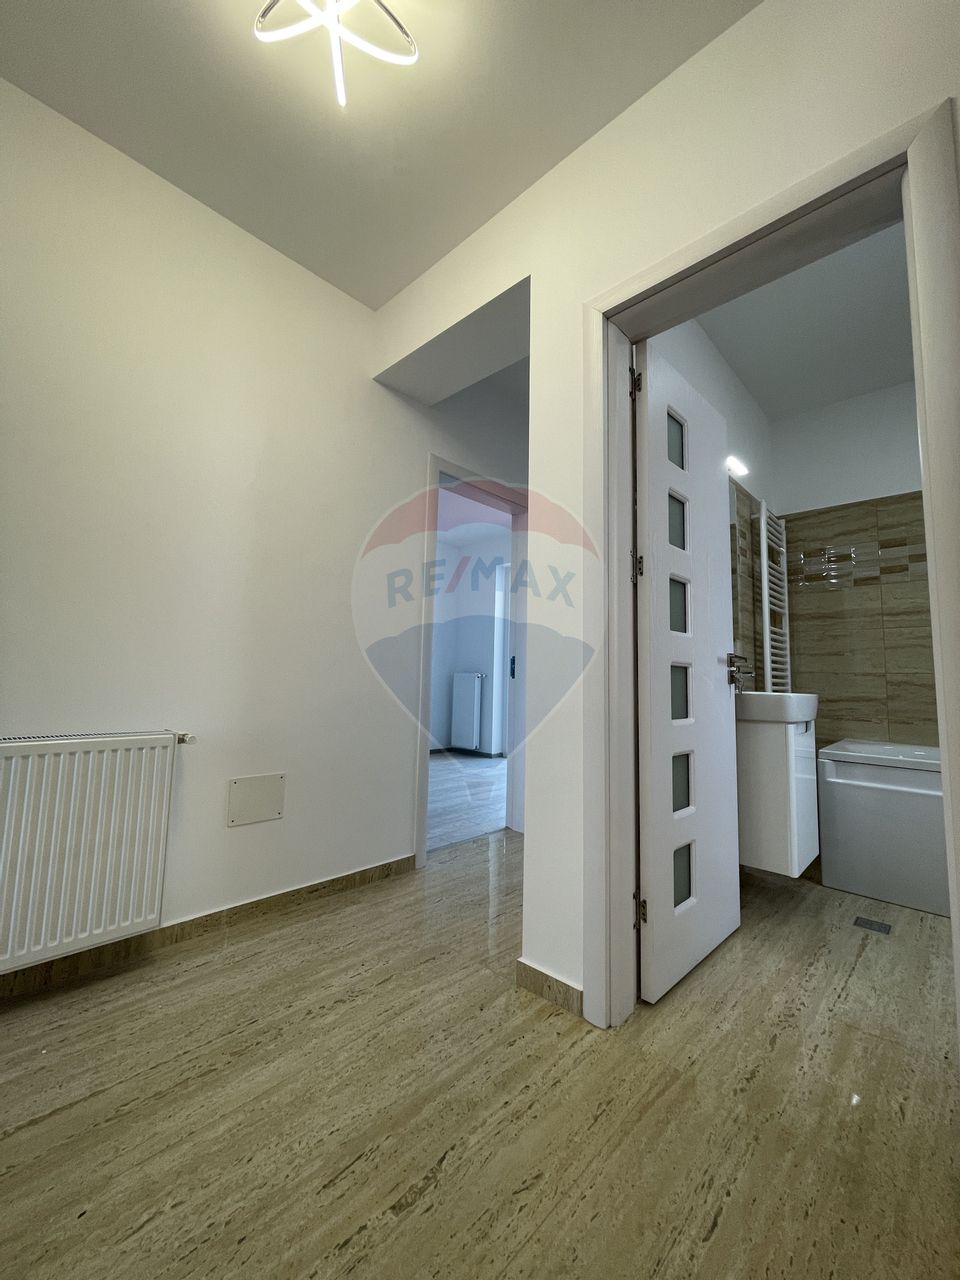 Villa 5 rooms 130sqm | Access Splaiul Unirii / Popesti Leordeni